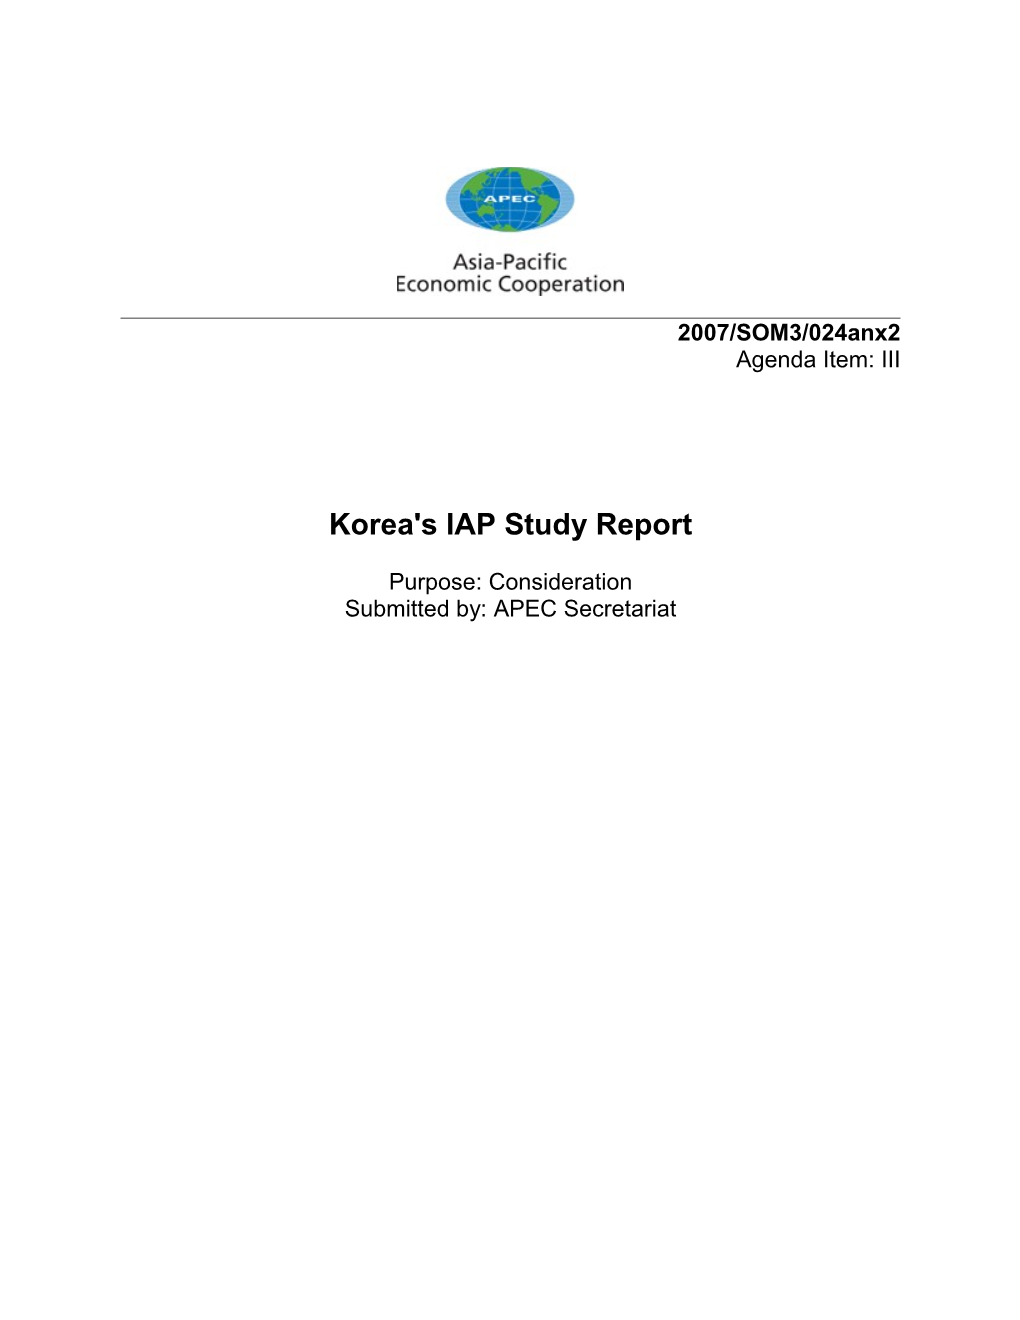 IAP Study Report Korea 2007